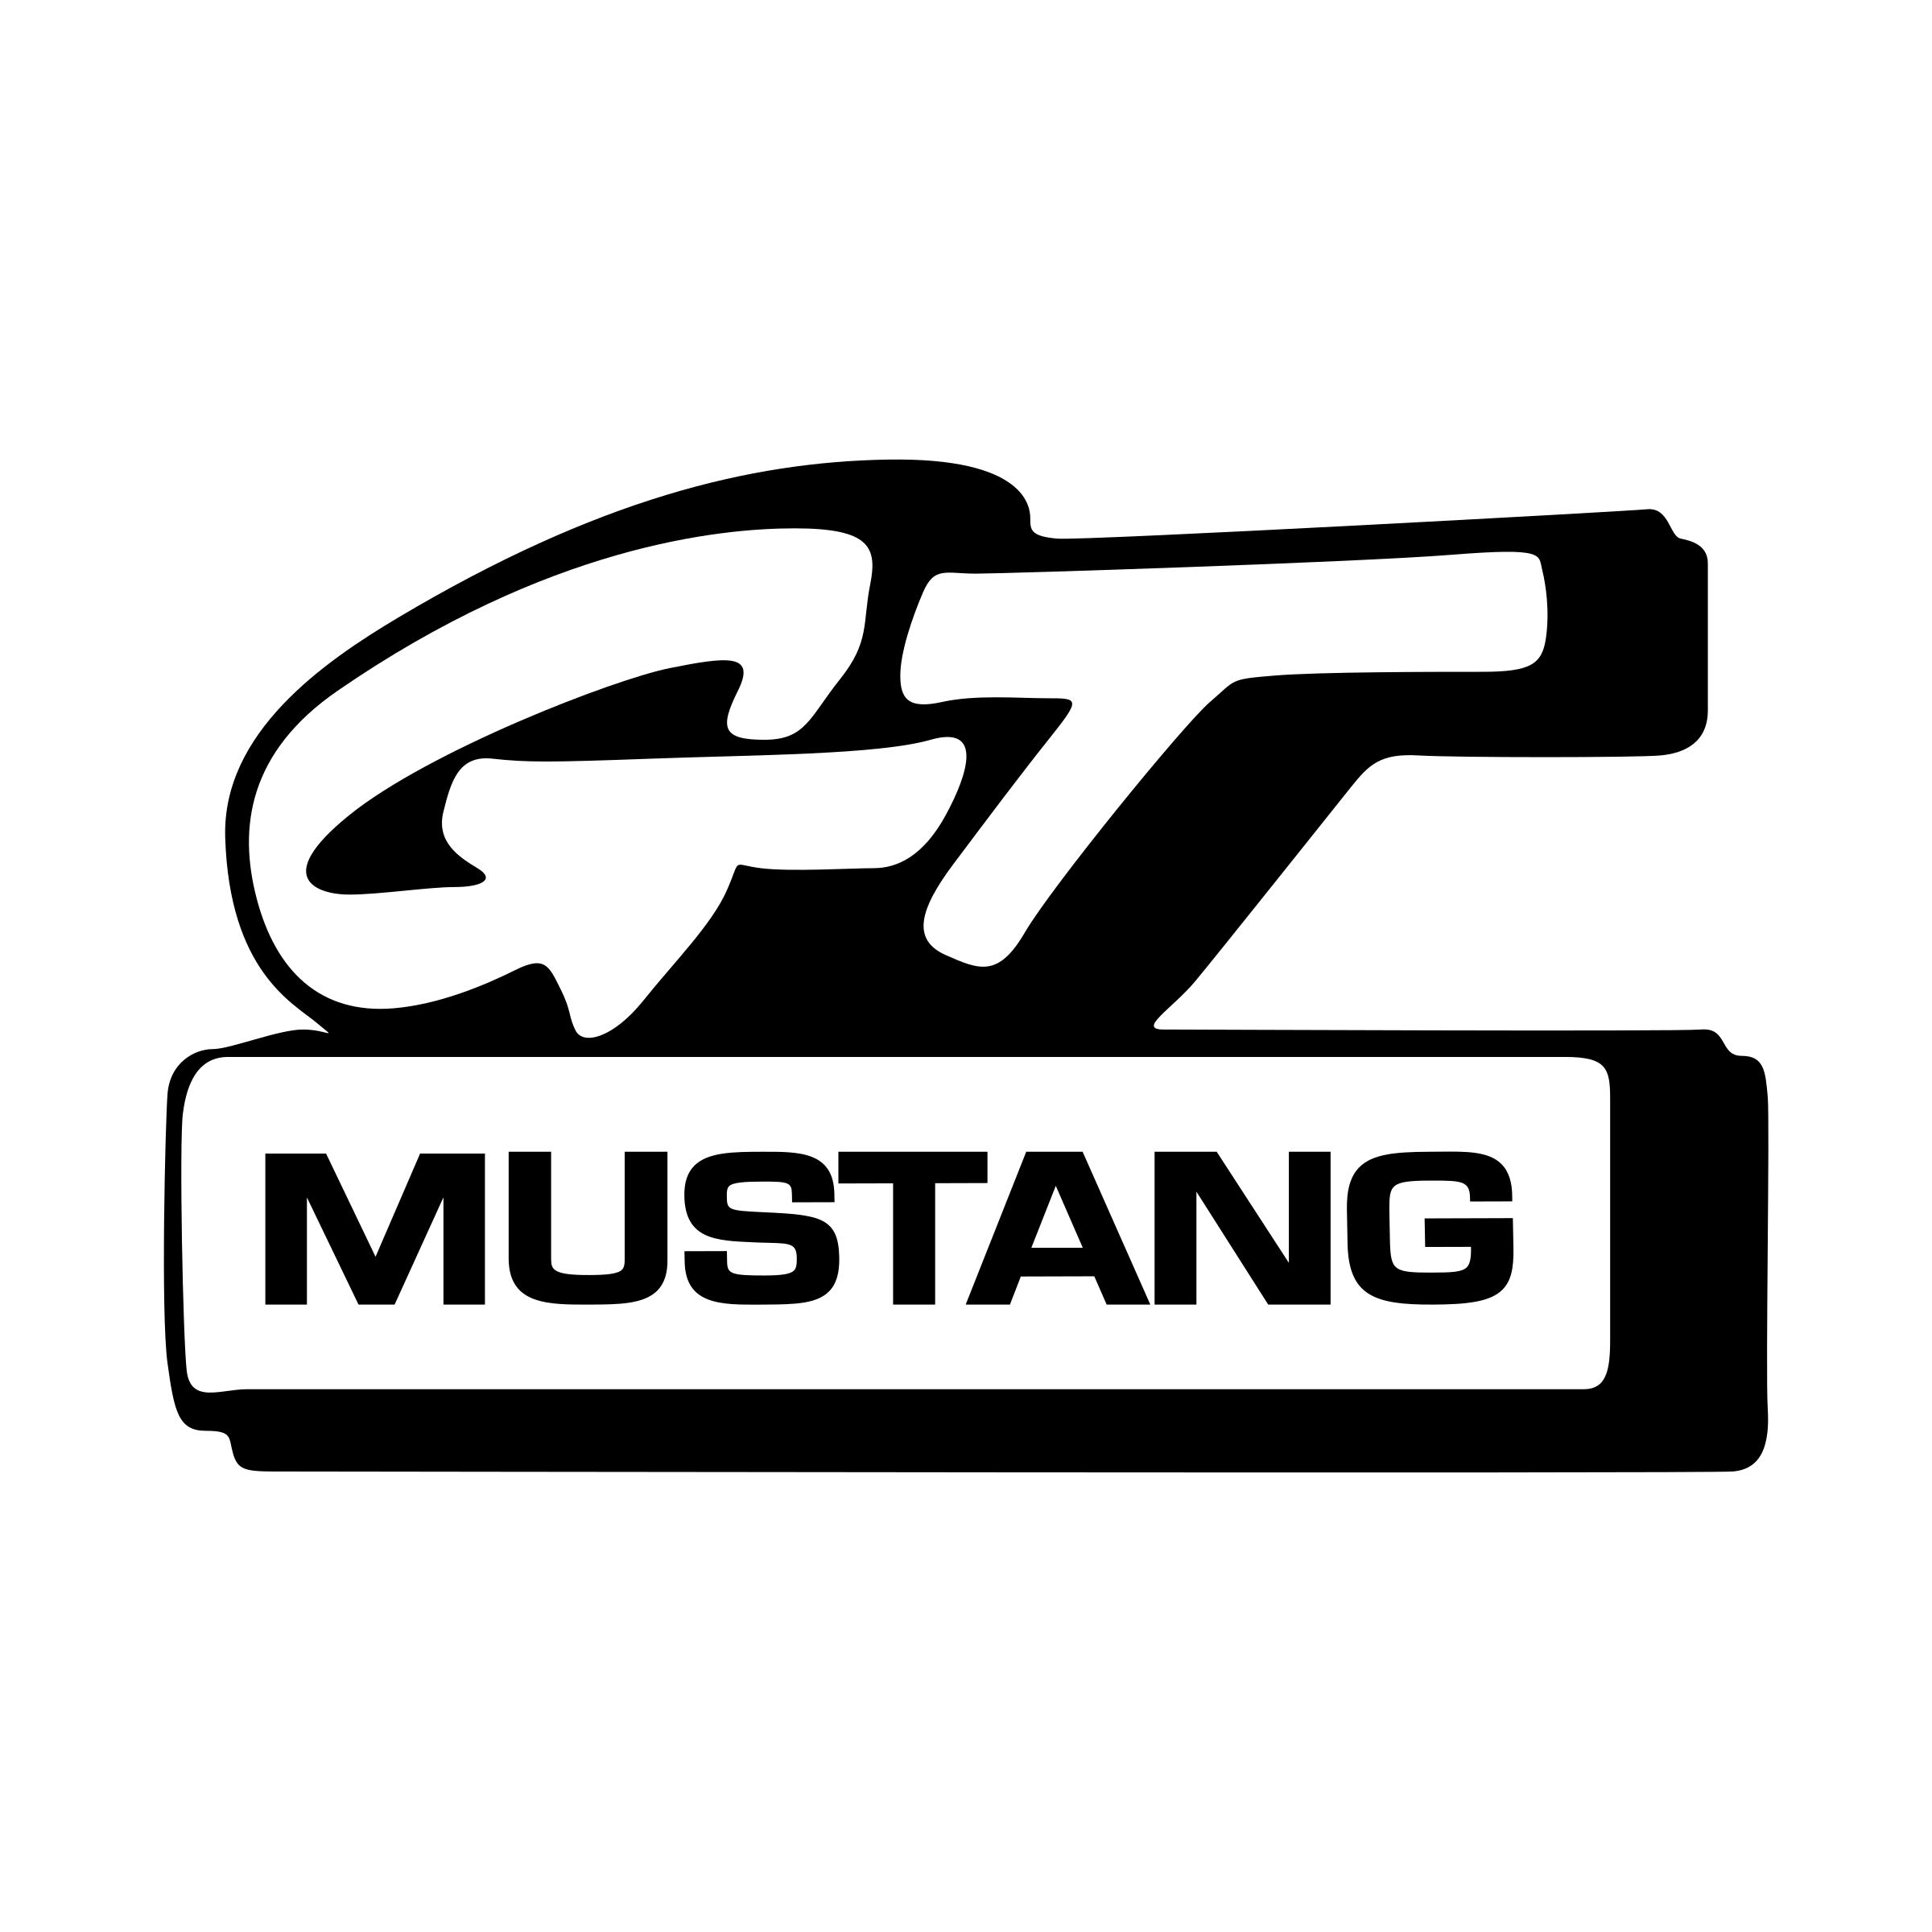 GT Logo - Mustang GT Logo PNG Transparent & SVG Vector - Freebie Supply